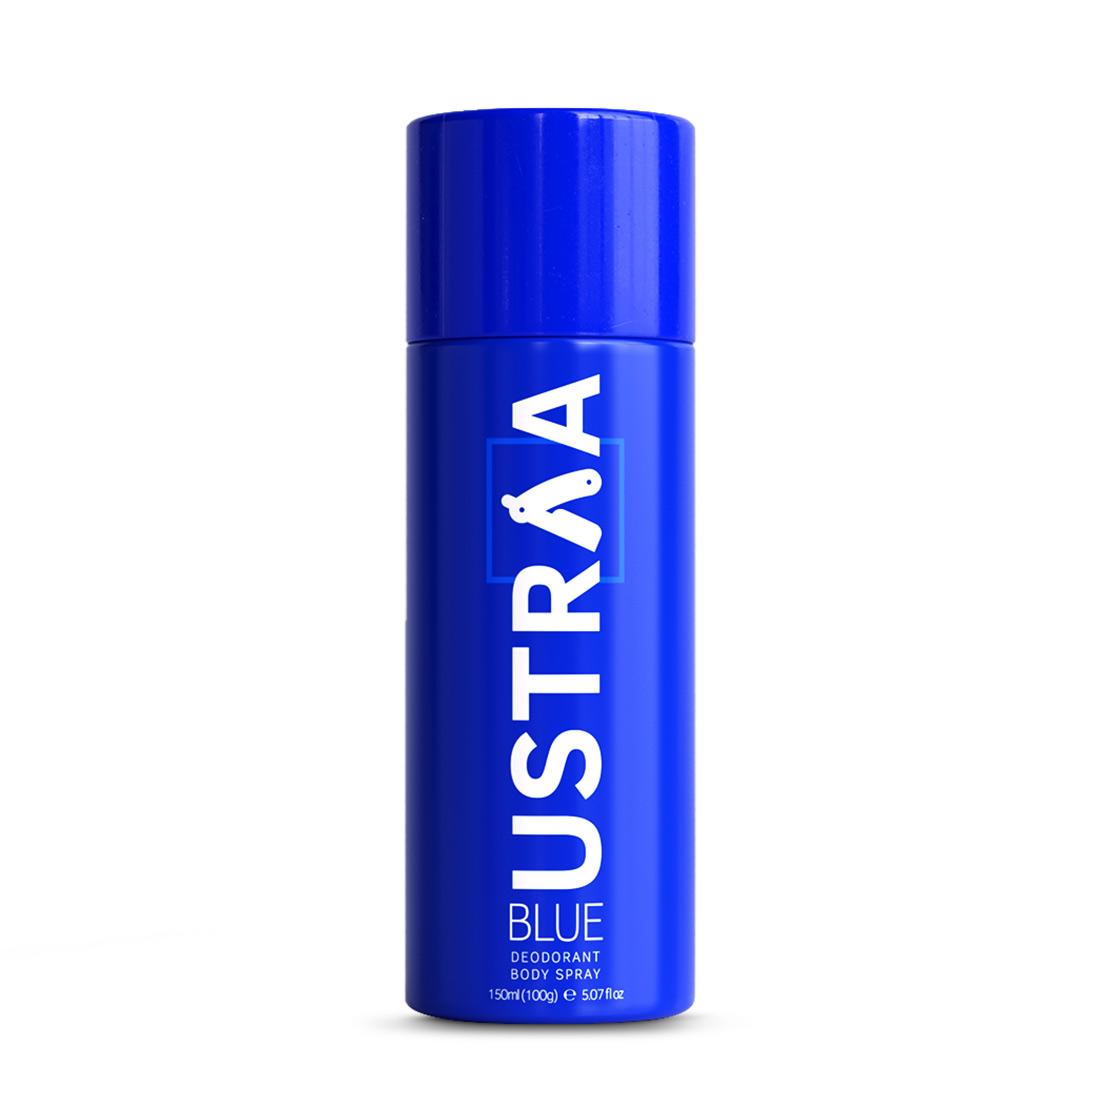 Ustraa Blue Deodorant Body Spray For Men (150ml) - Long Lasting Fragrance